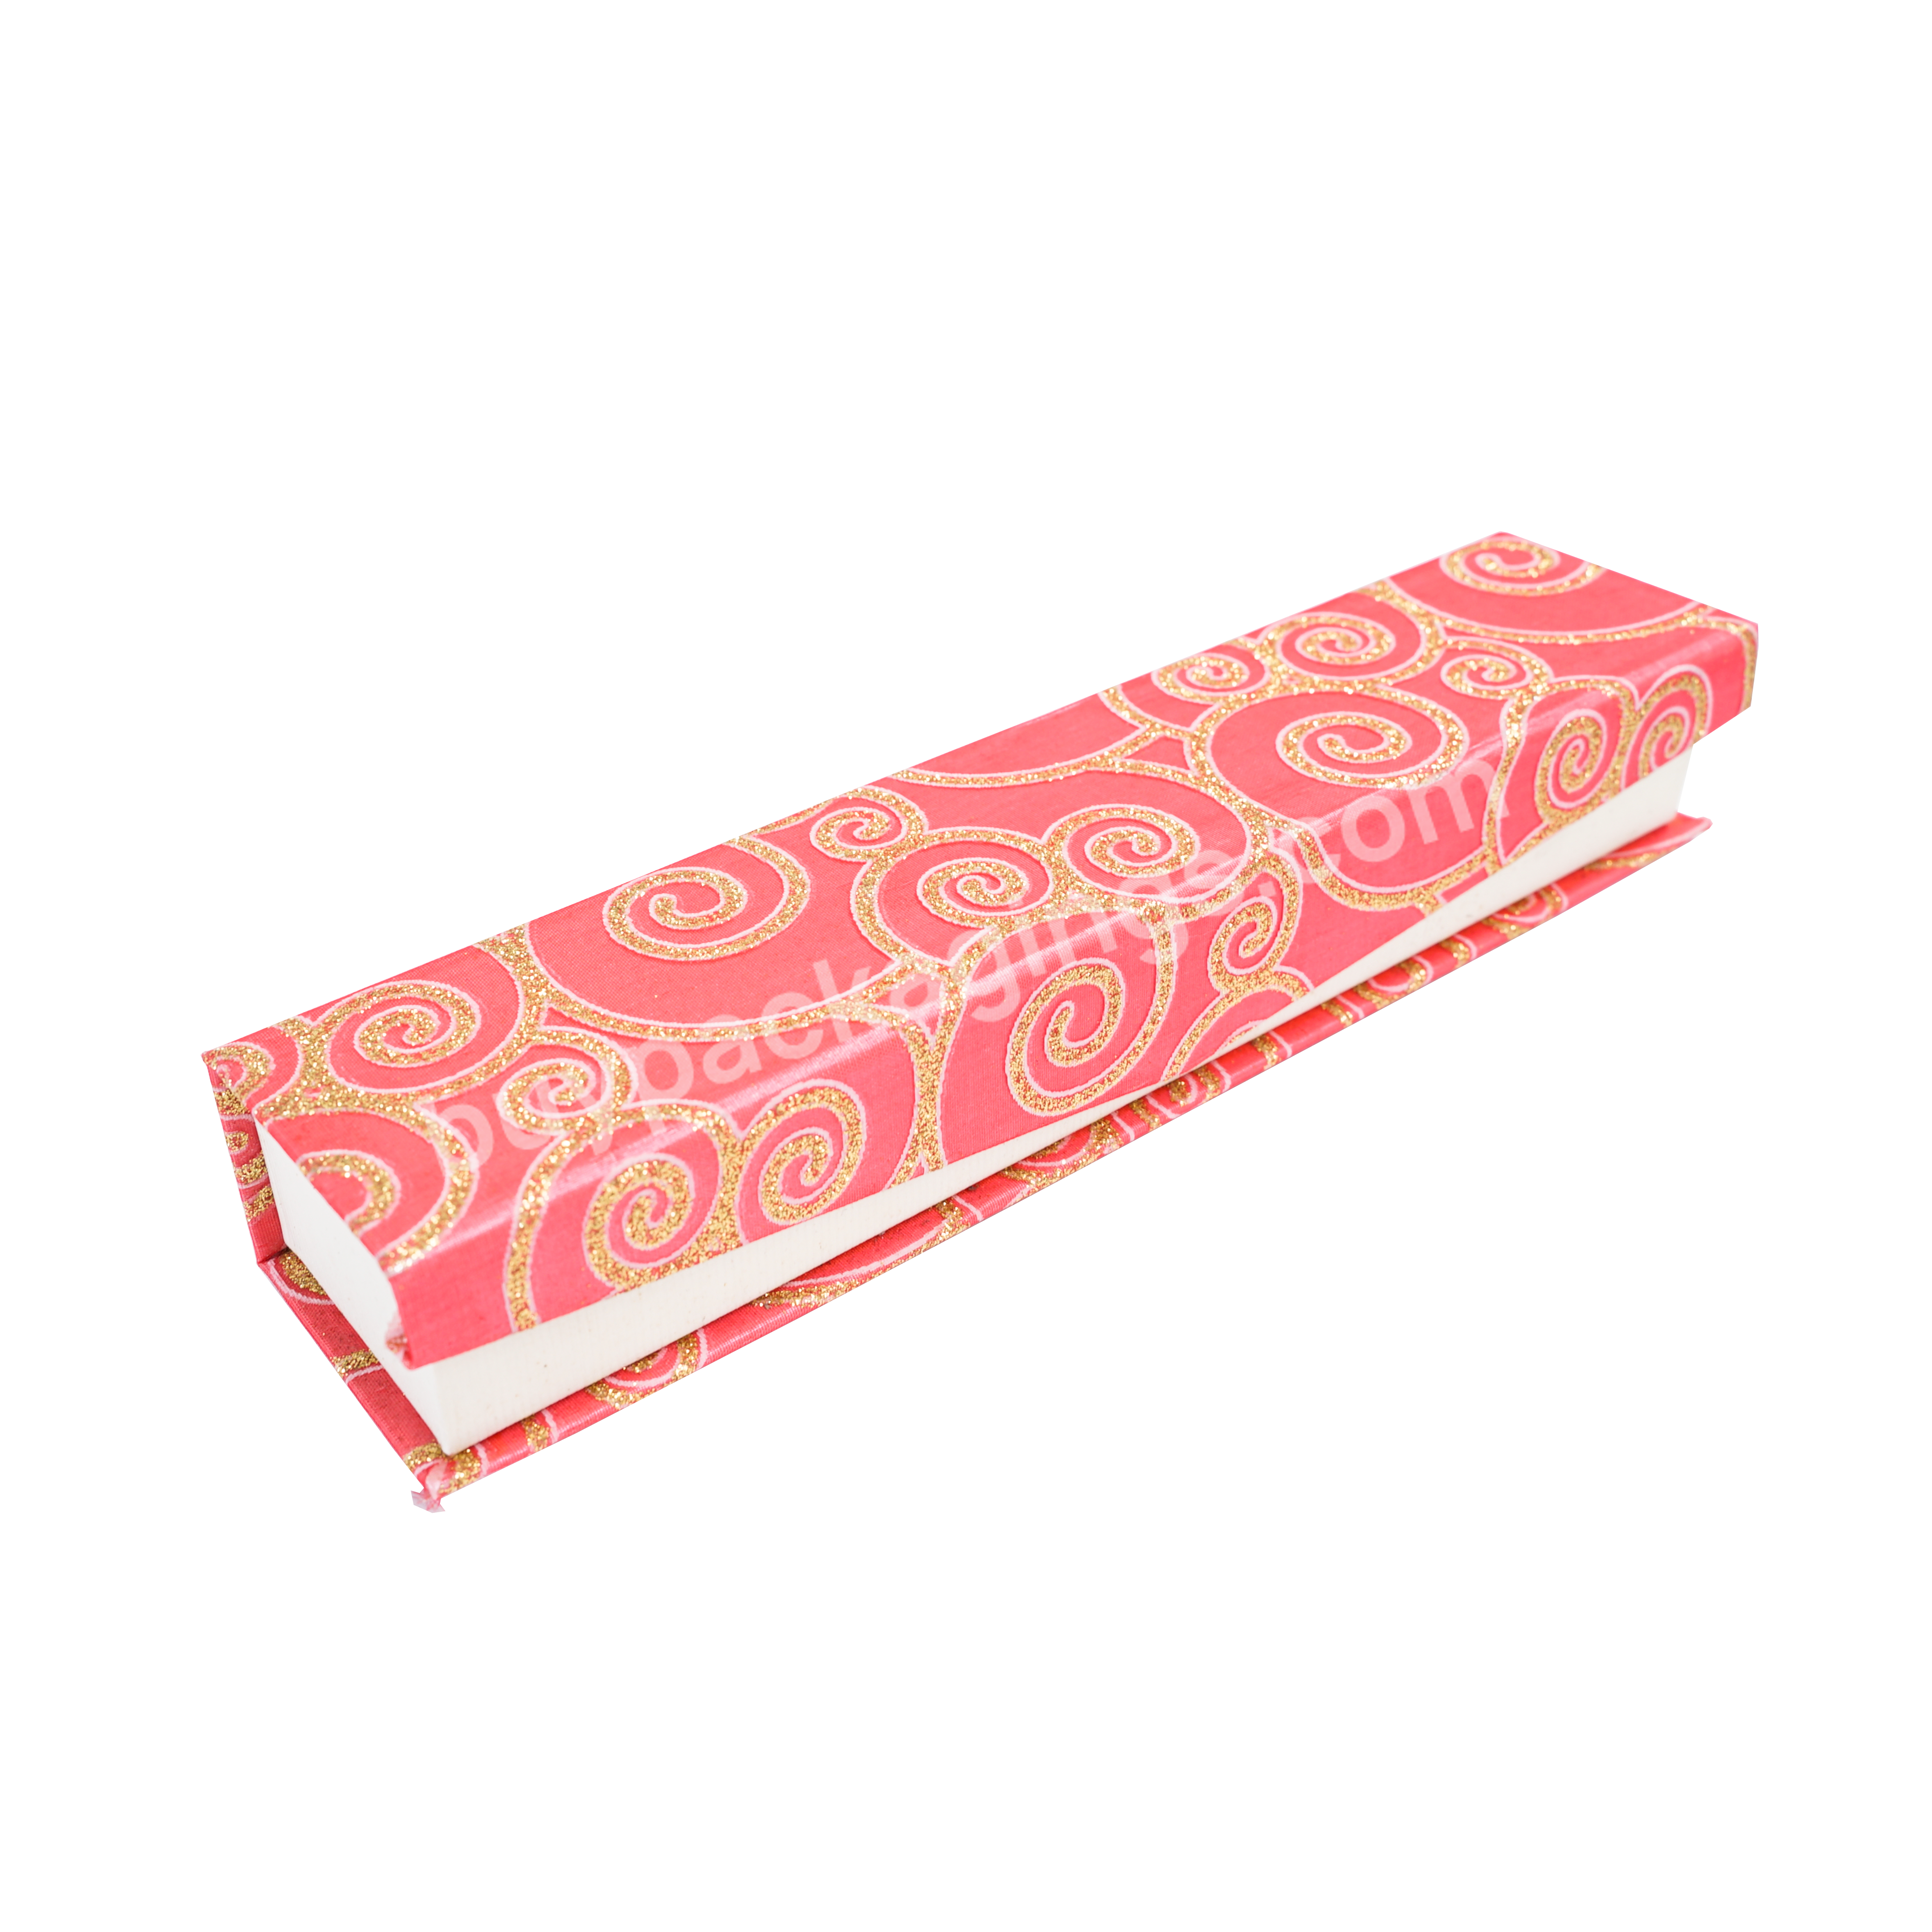 Custom Matt Lamination Paper Cardboard Chloe Cross Rectangle Fancy Jewelry Box For Gift Packaging